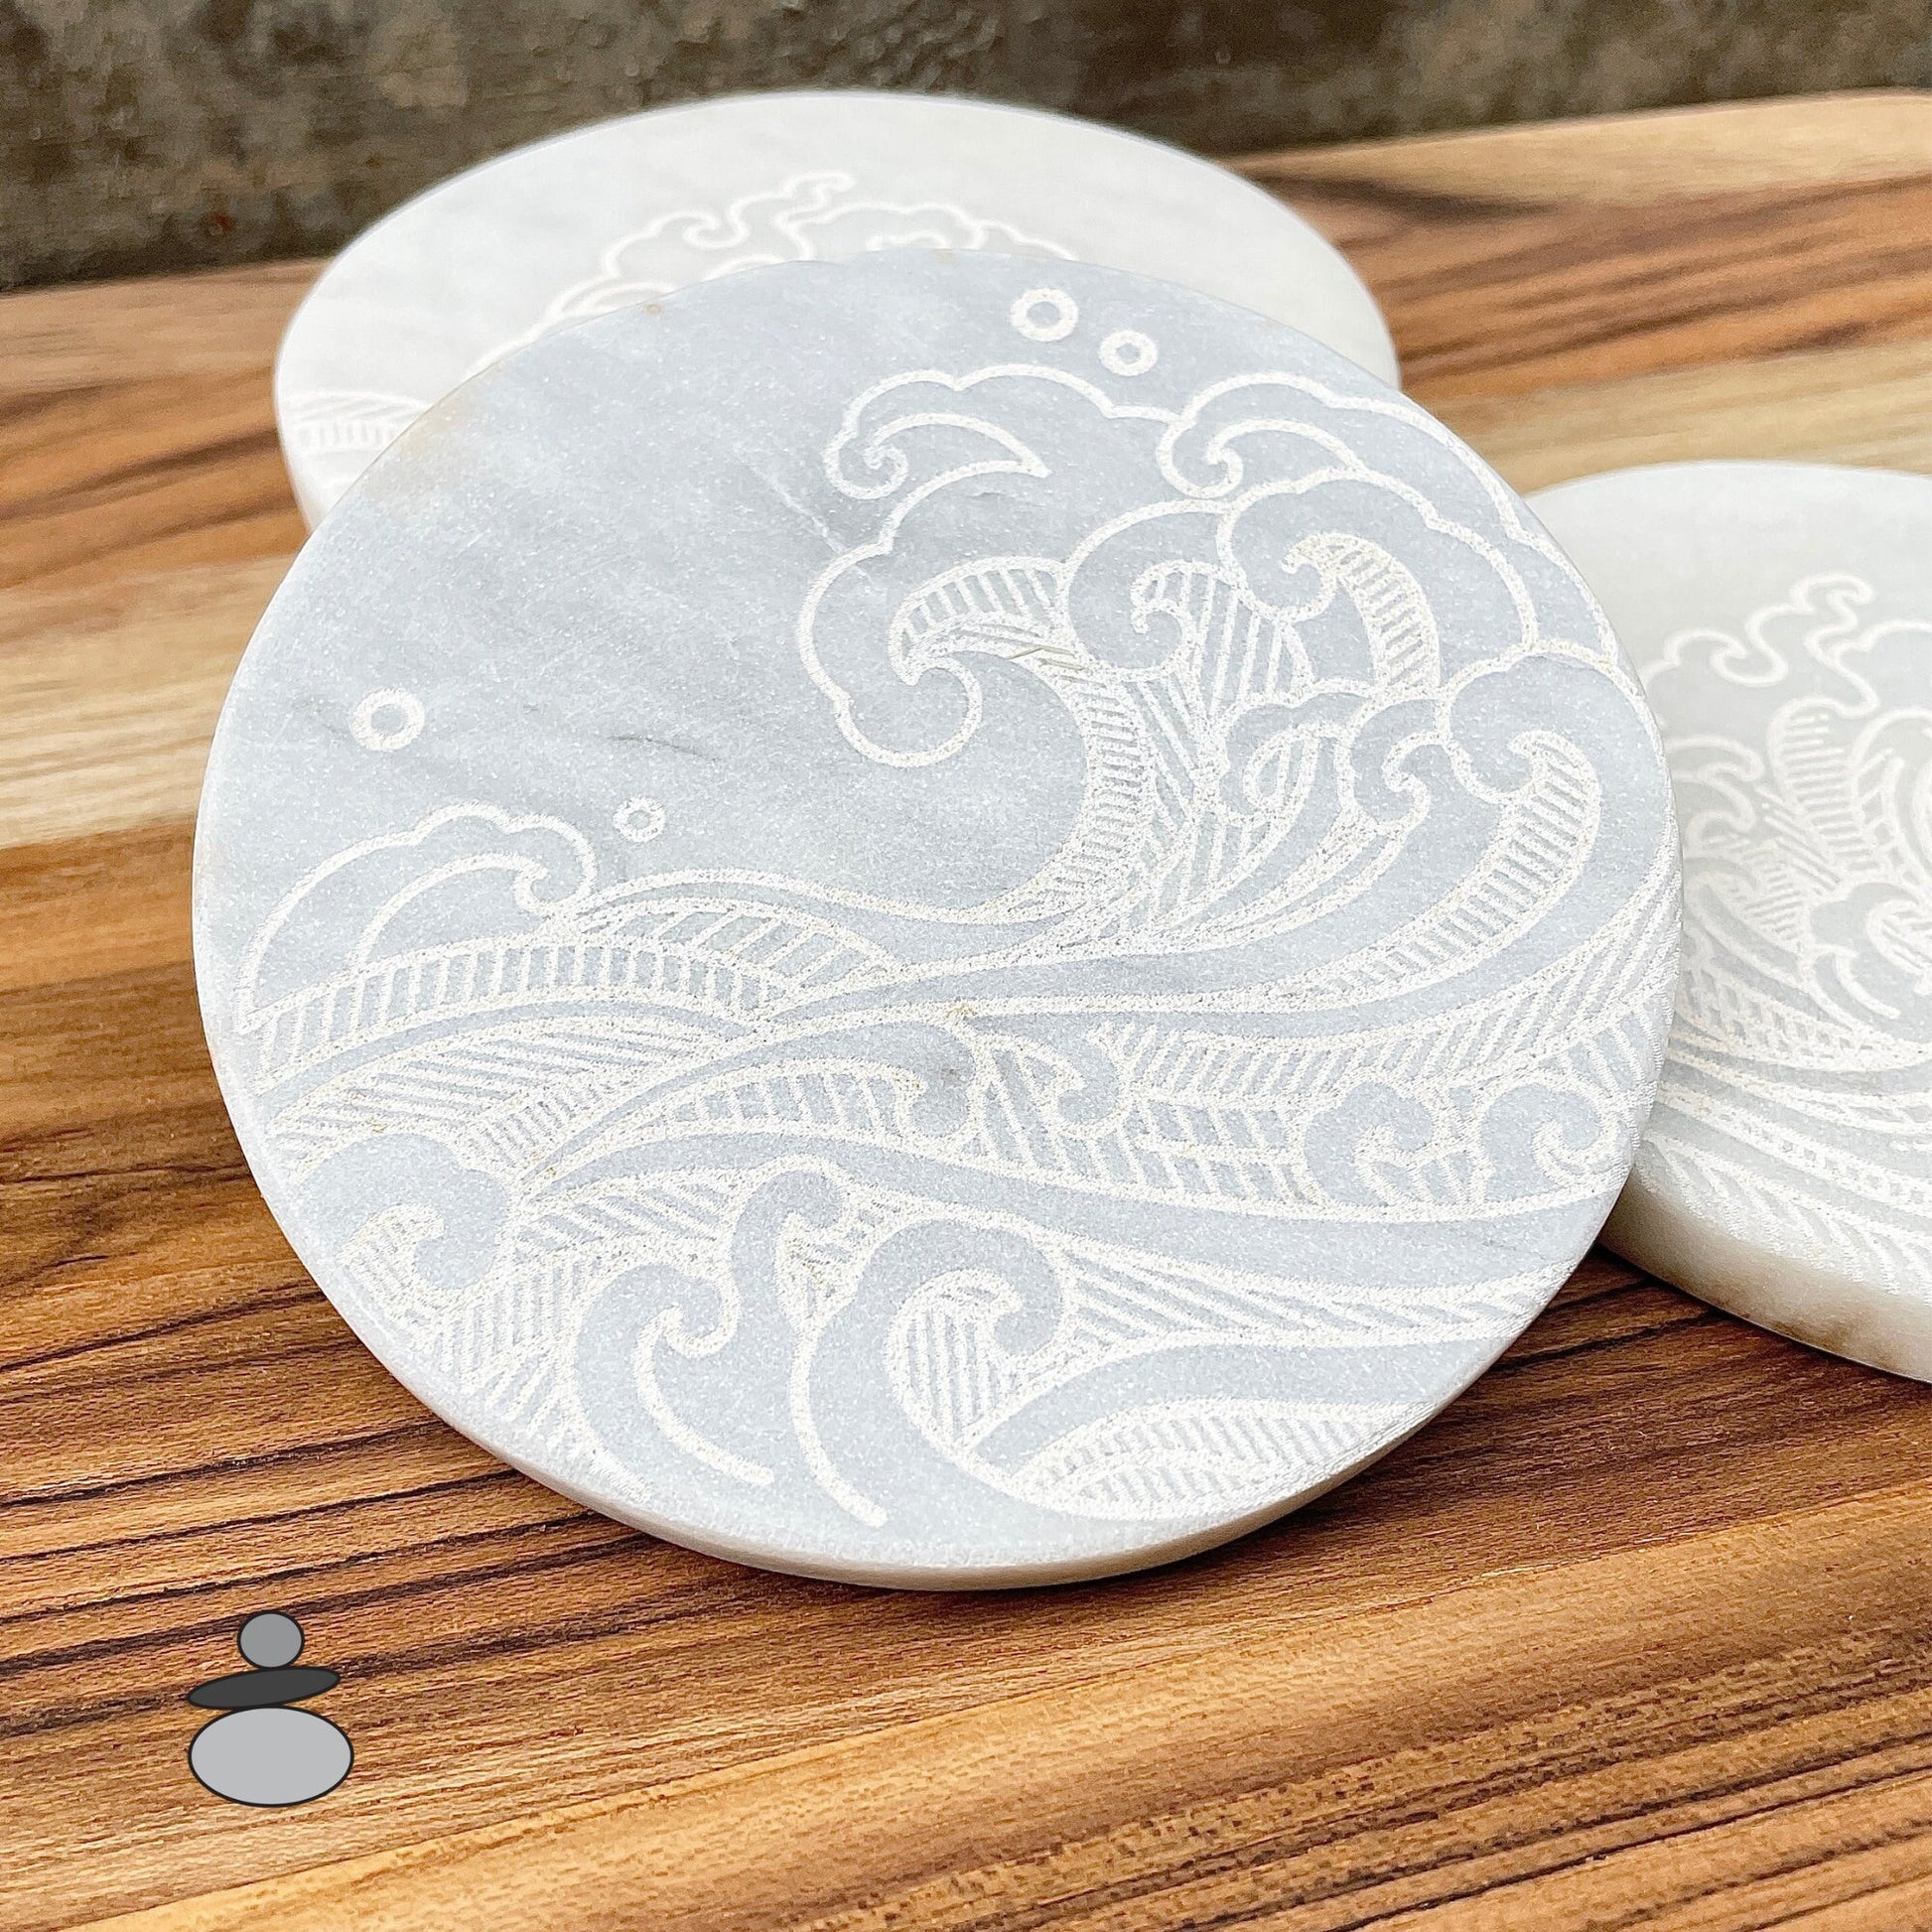 Asian Wave Marble Coaster Set, Martial Arts Gift Idea, Gift For Sensei, Engraved Marble